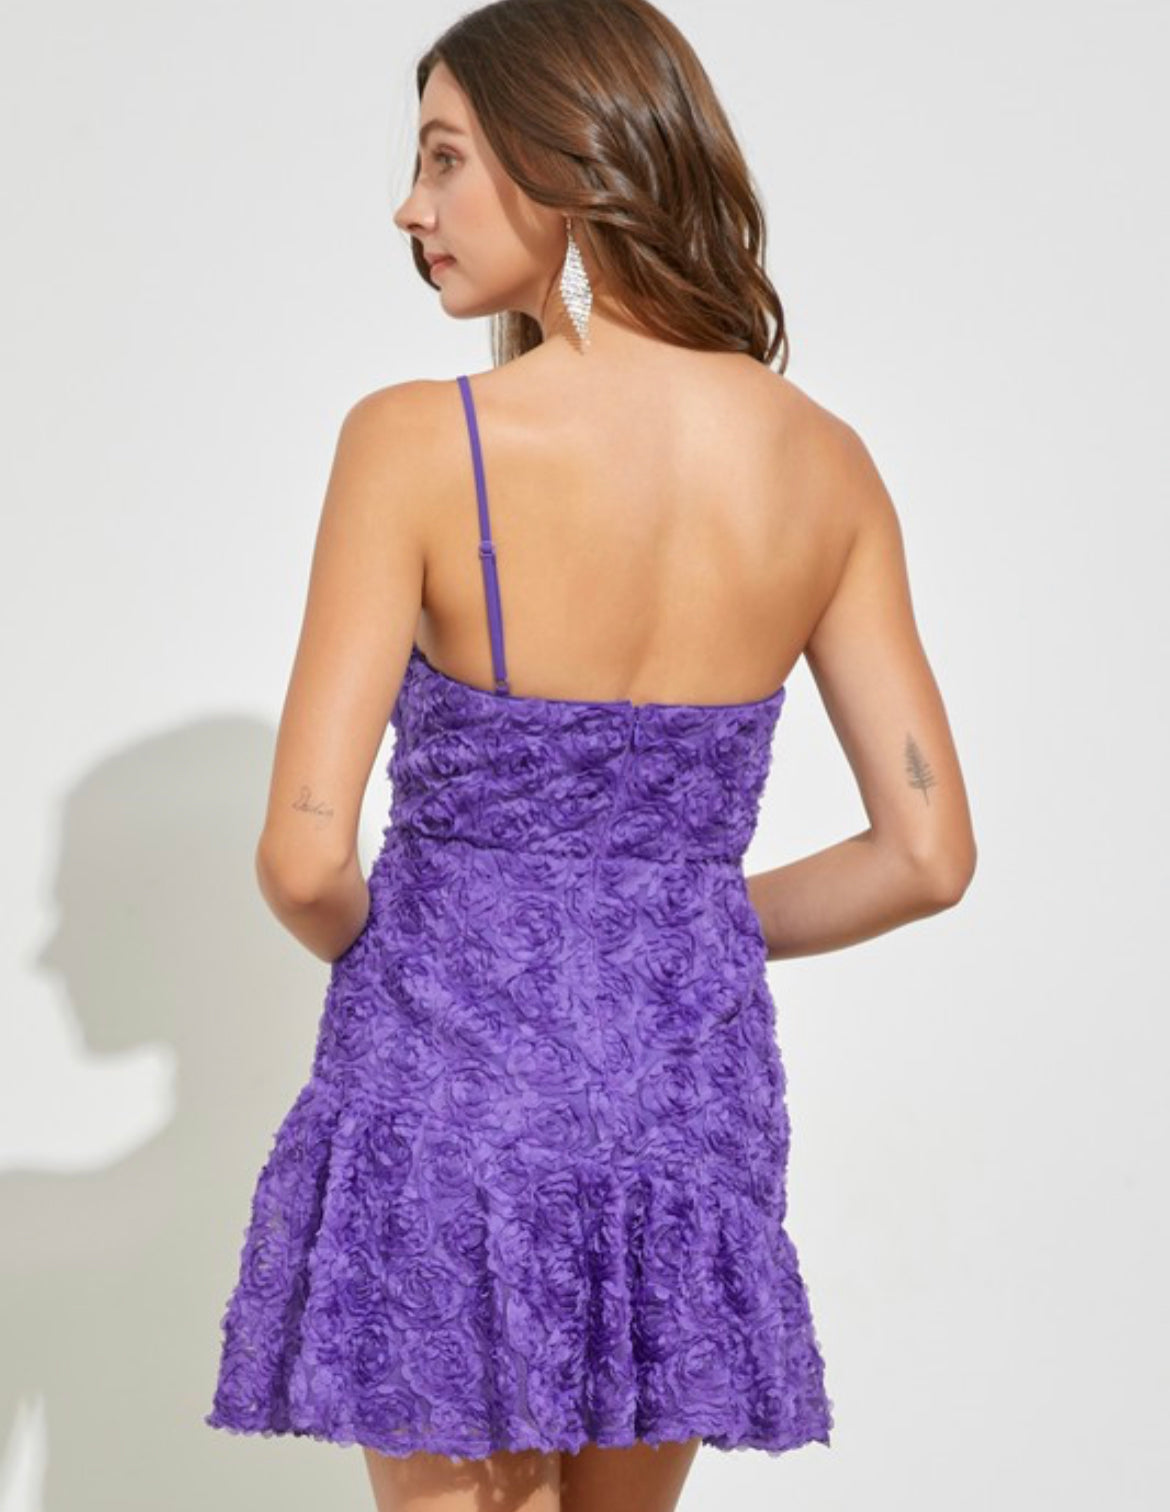 Tara one shoulder purple dress